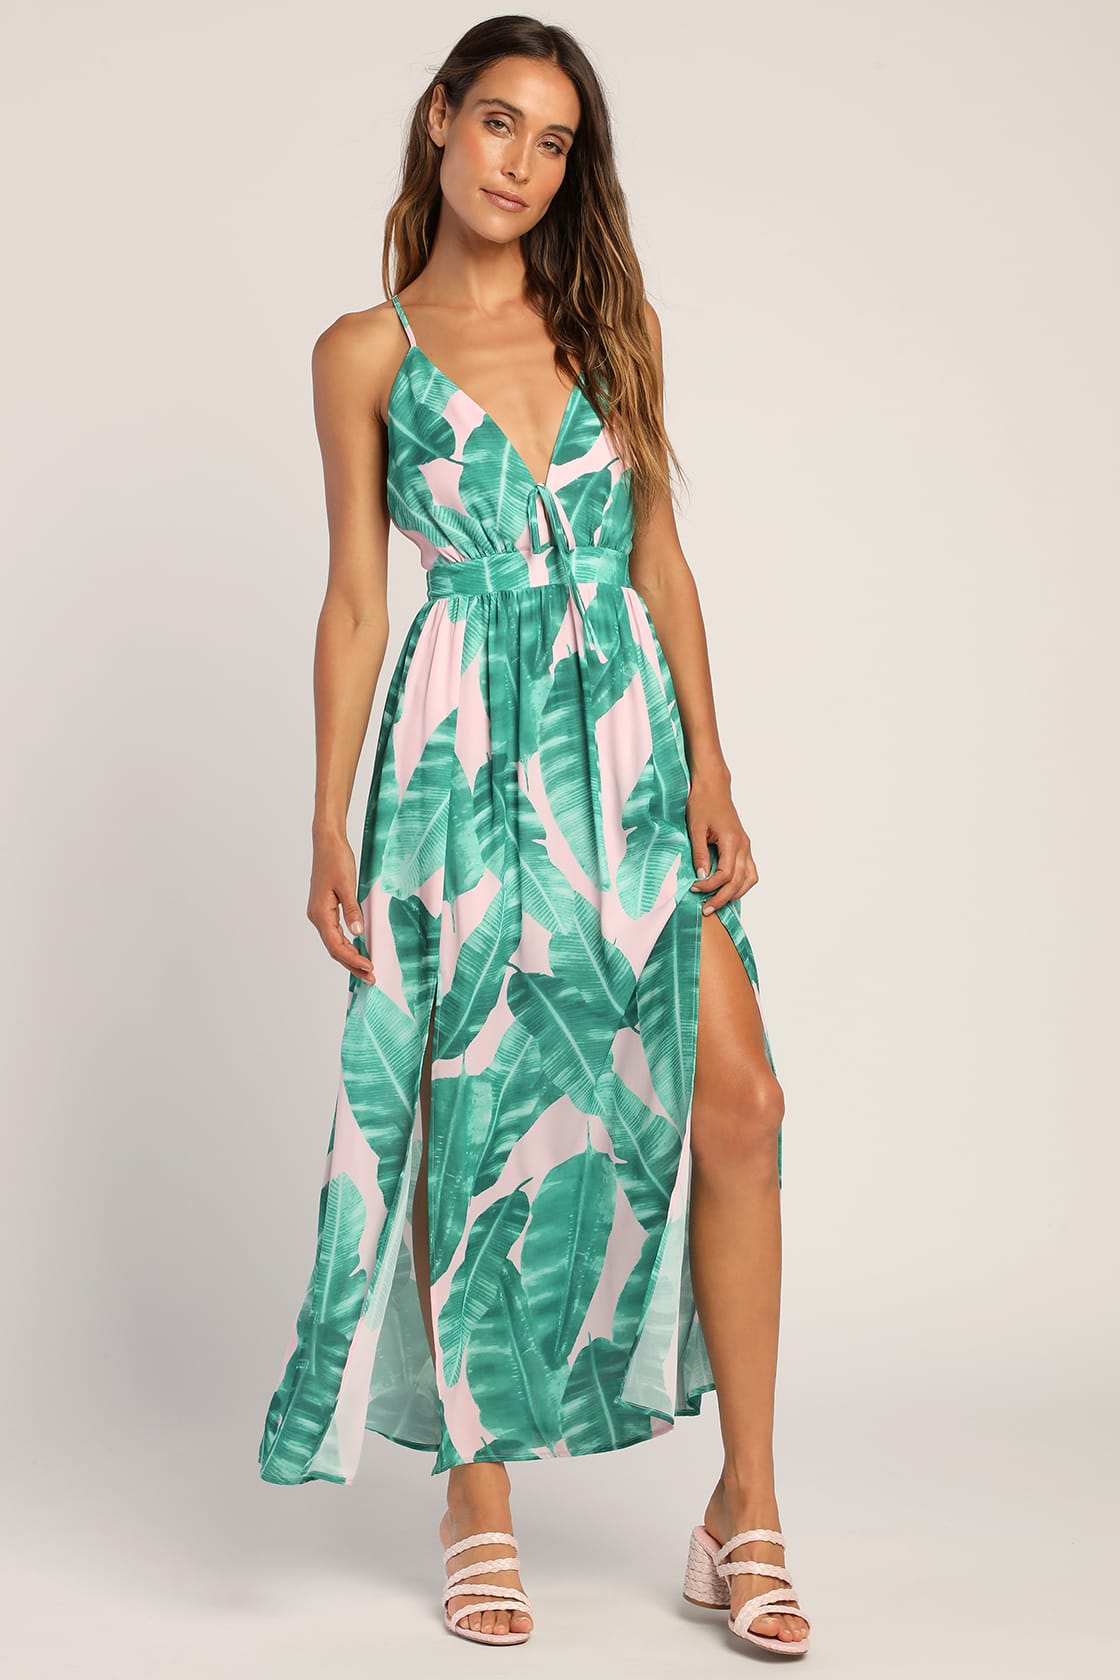 Pink Leaf Print Dress - Slit Maxi Dress - Tropical Print Dress - Lulus